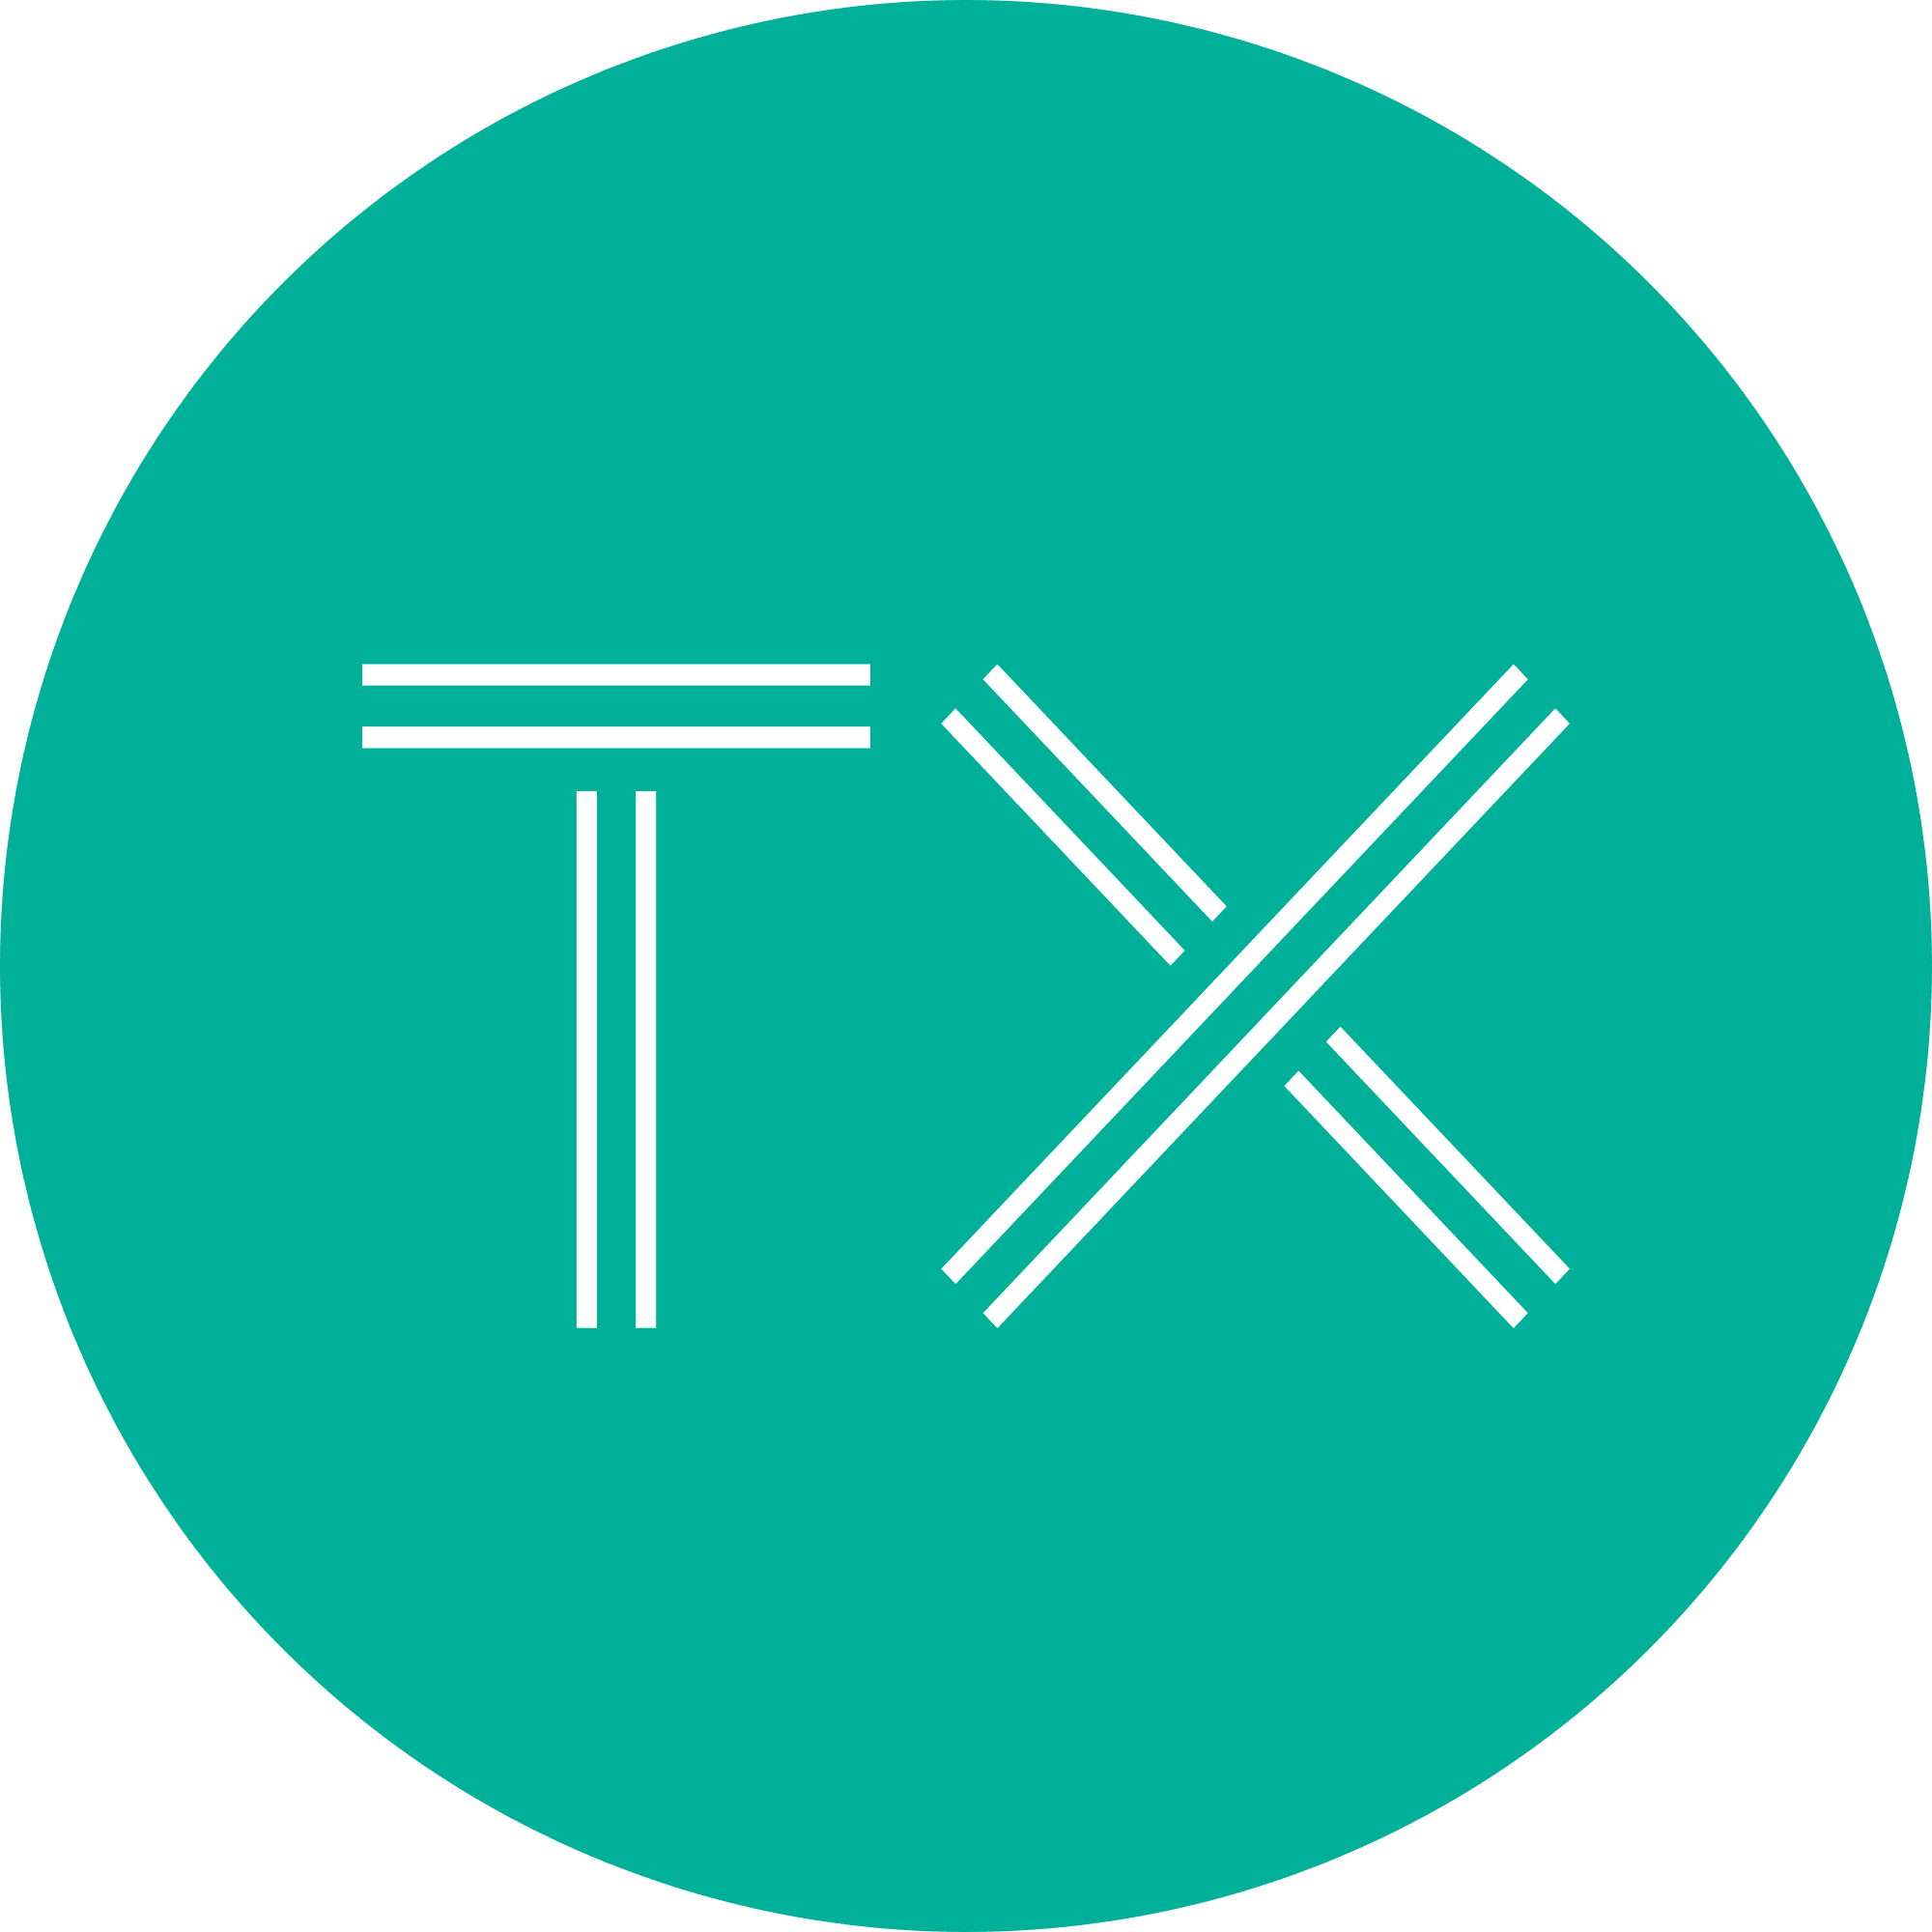 SophiaTX logo in png format